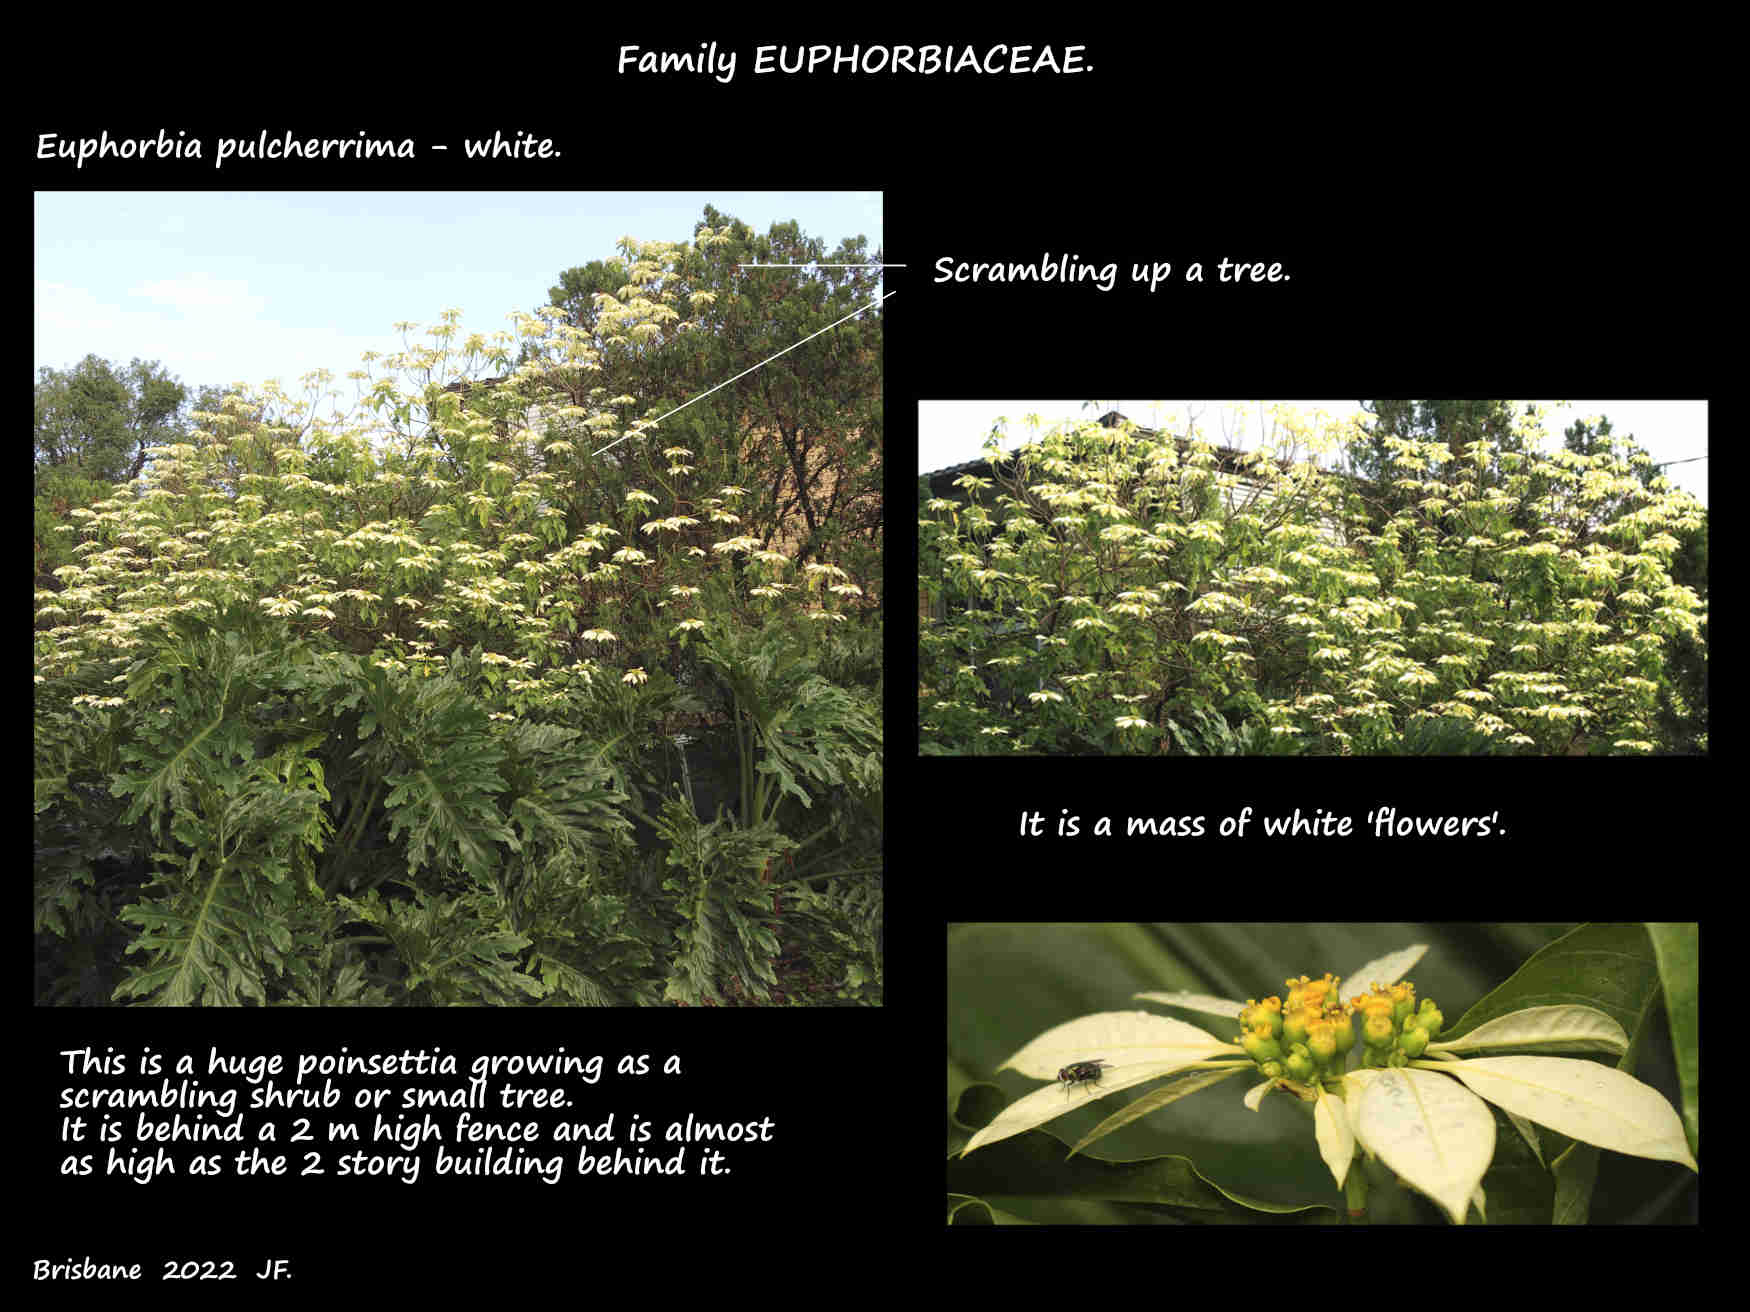 5b A large white poinsettia tree